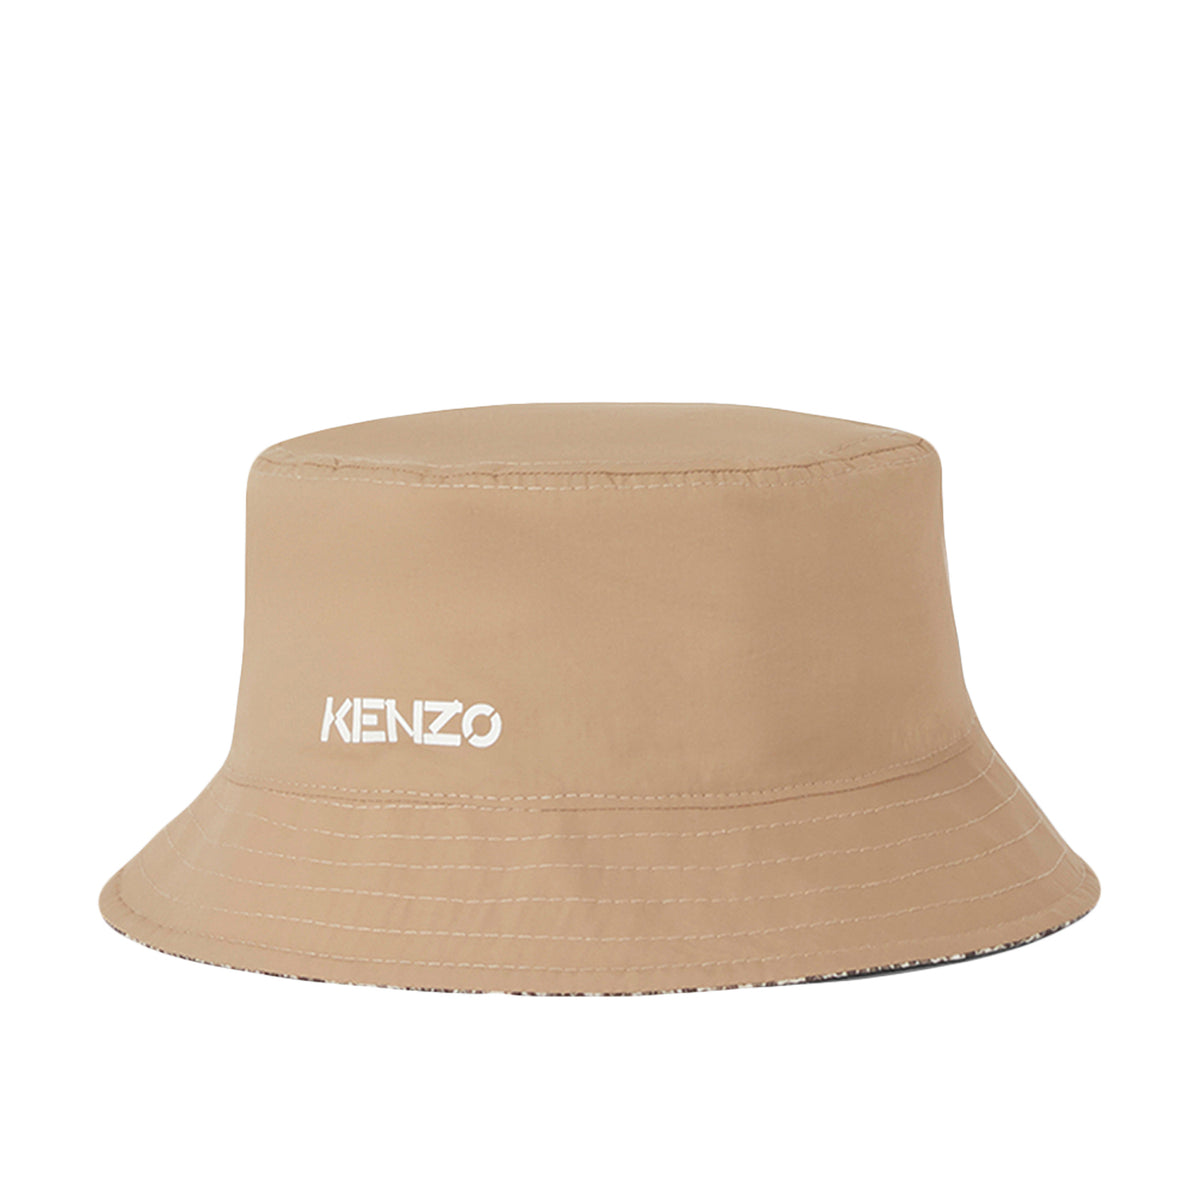 Kenzo 'Python' Reversible Bucket Hat